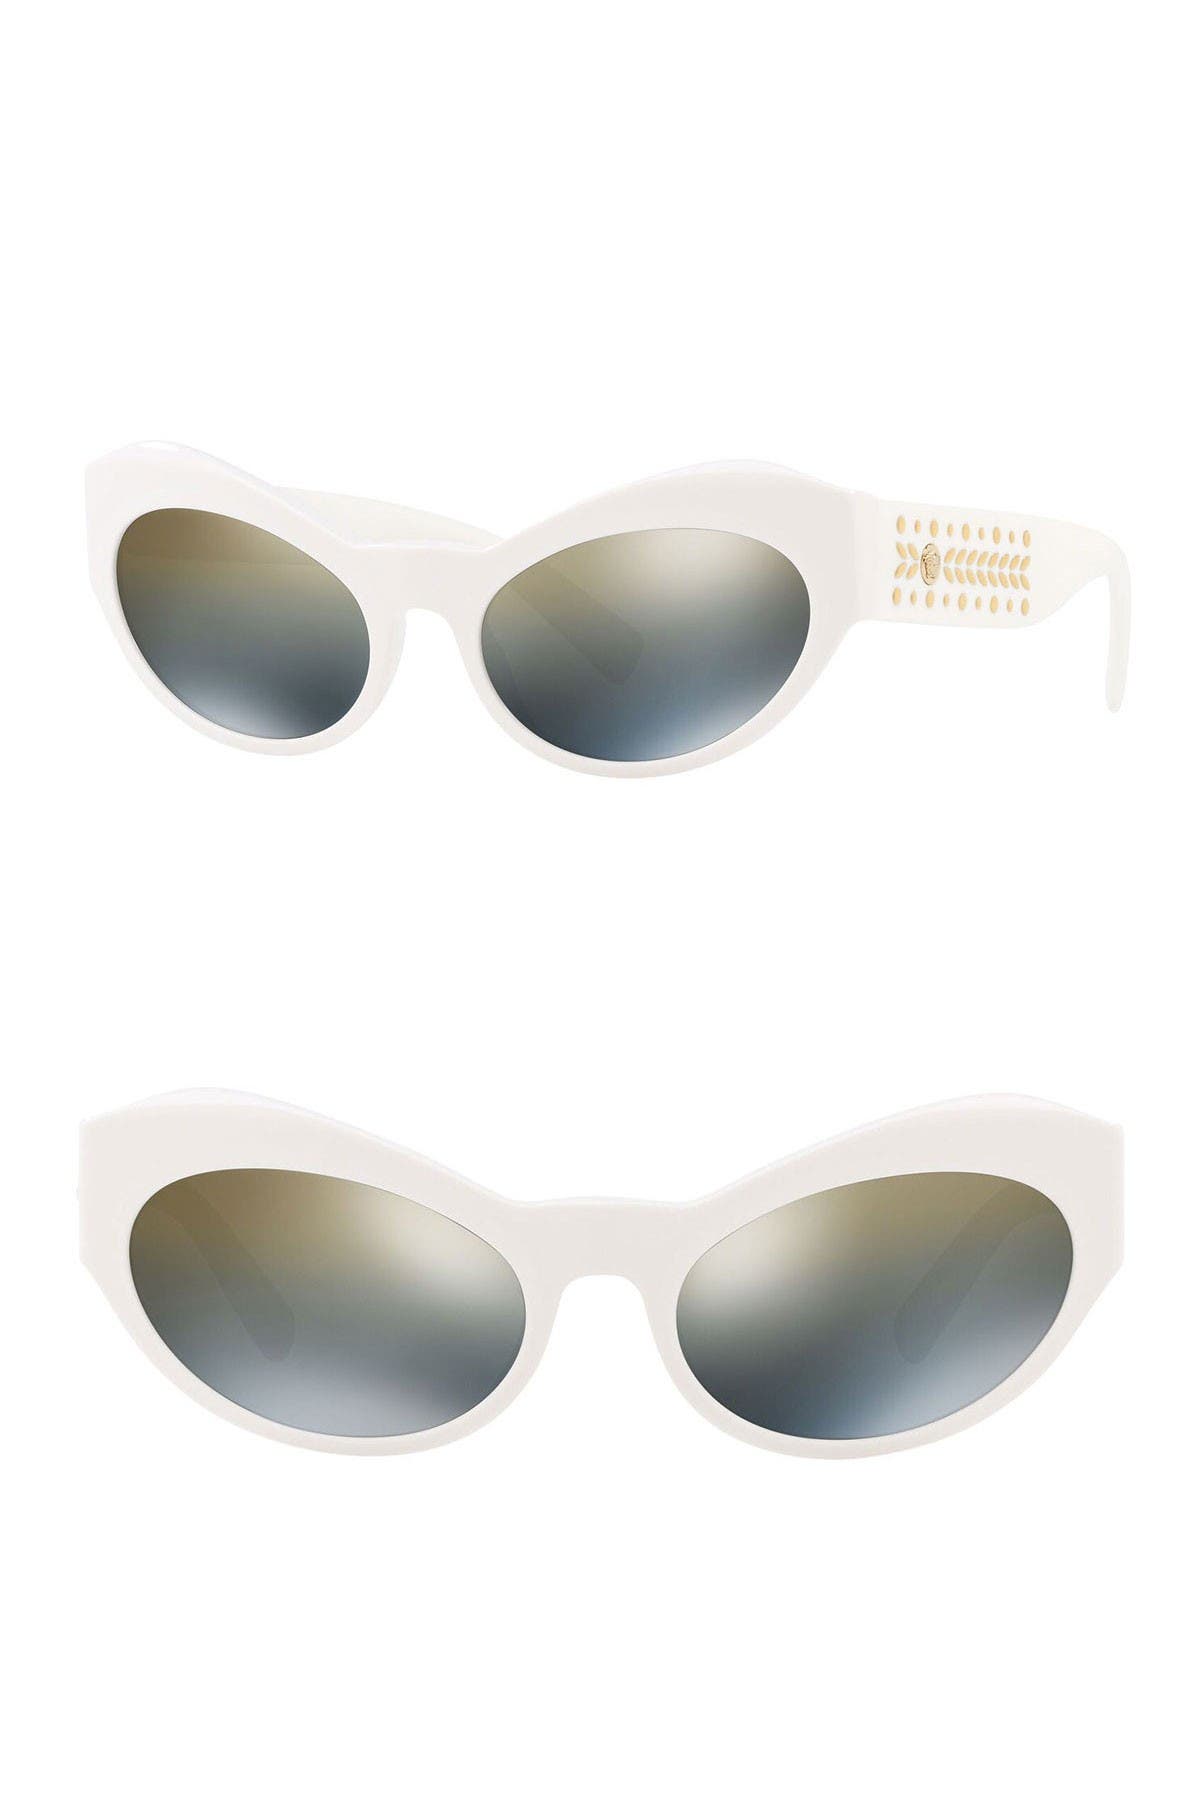 Versace | 54mm Butterfly Sunglasses 